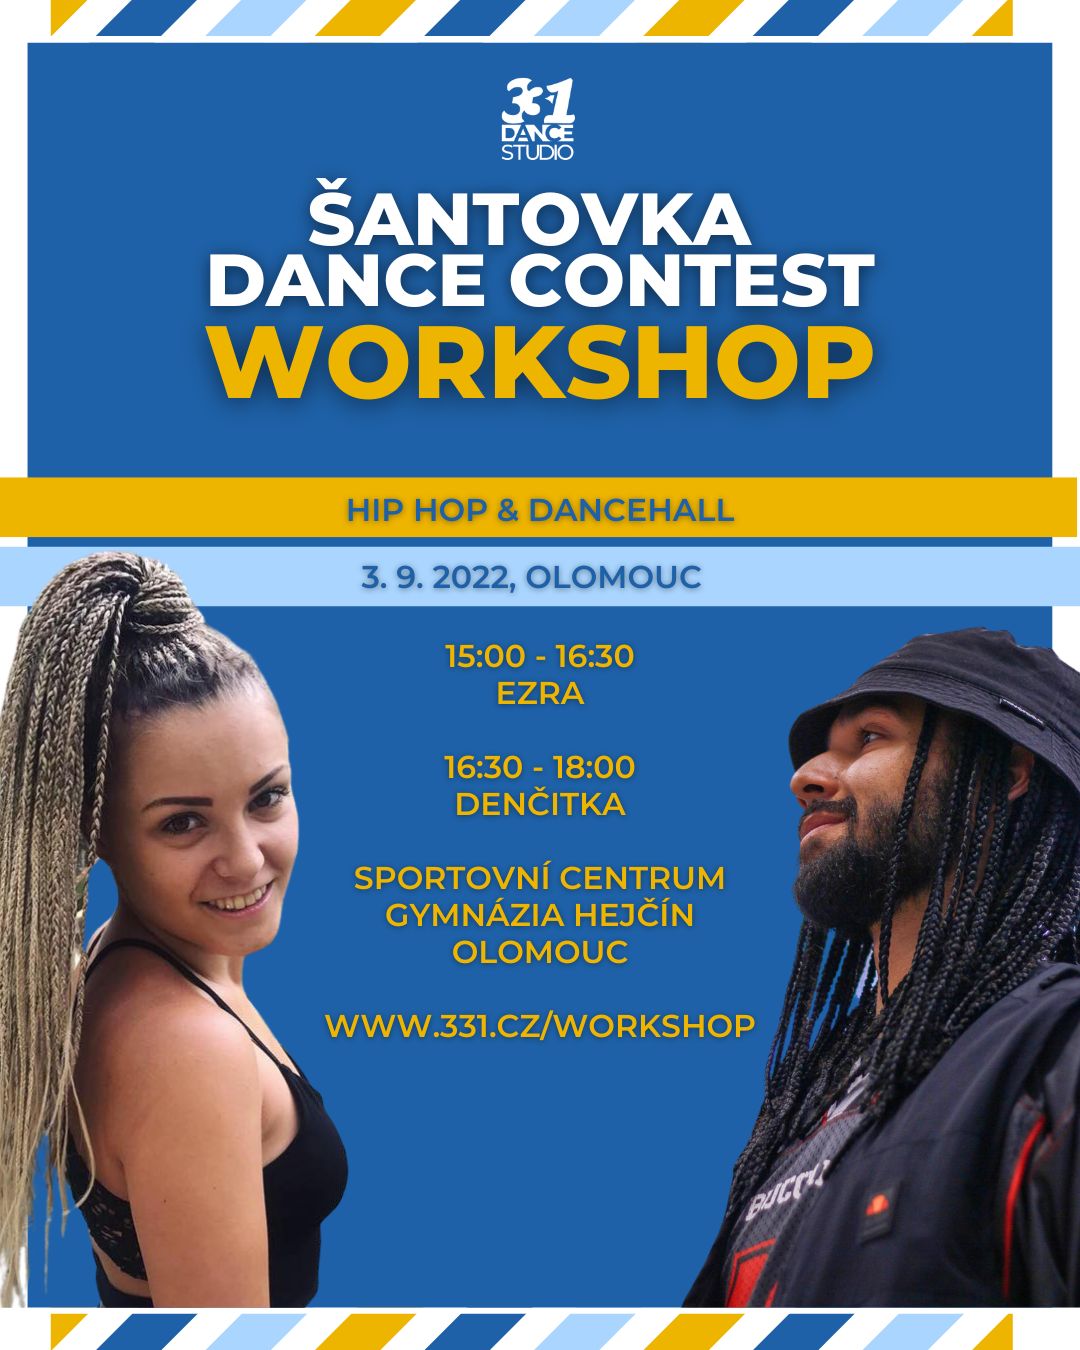 Šantovka Dance Contest Workshop 2022 | 331 Dance Studio Olomouc